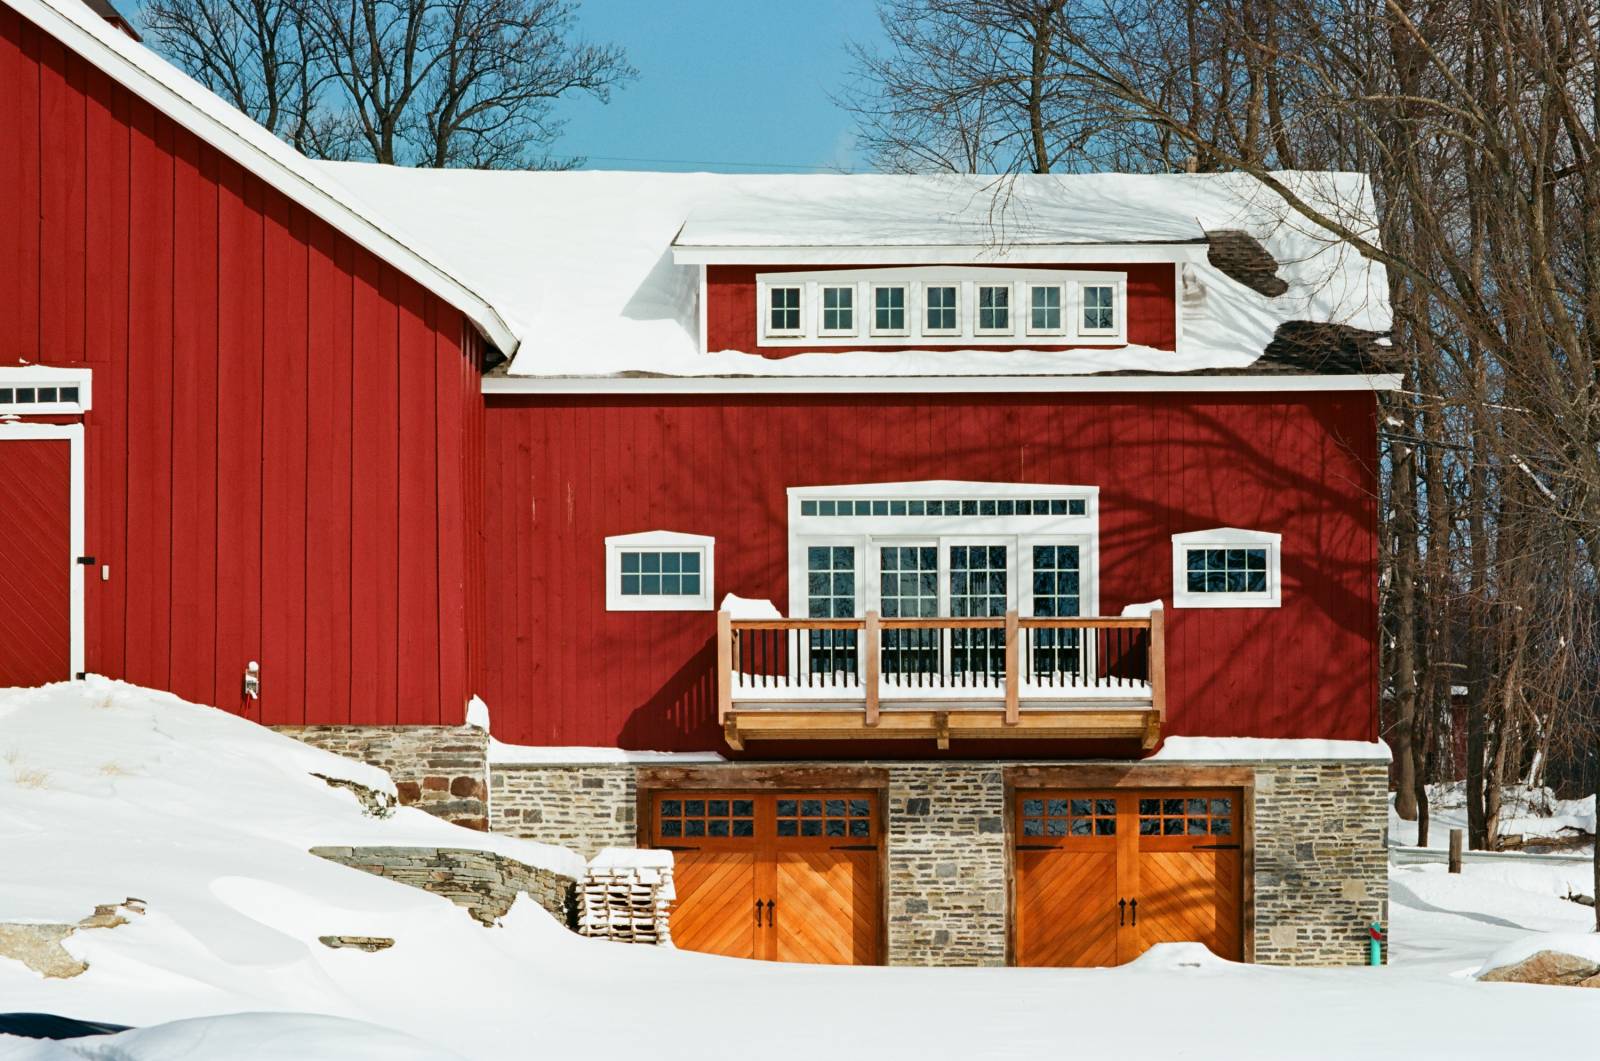 Front view showing cantilever deck • custom garage doors • transom dormer